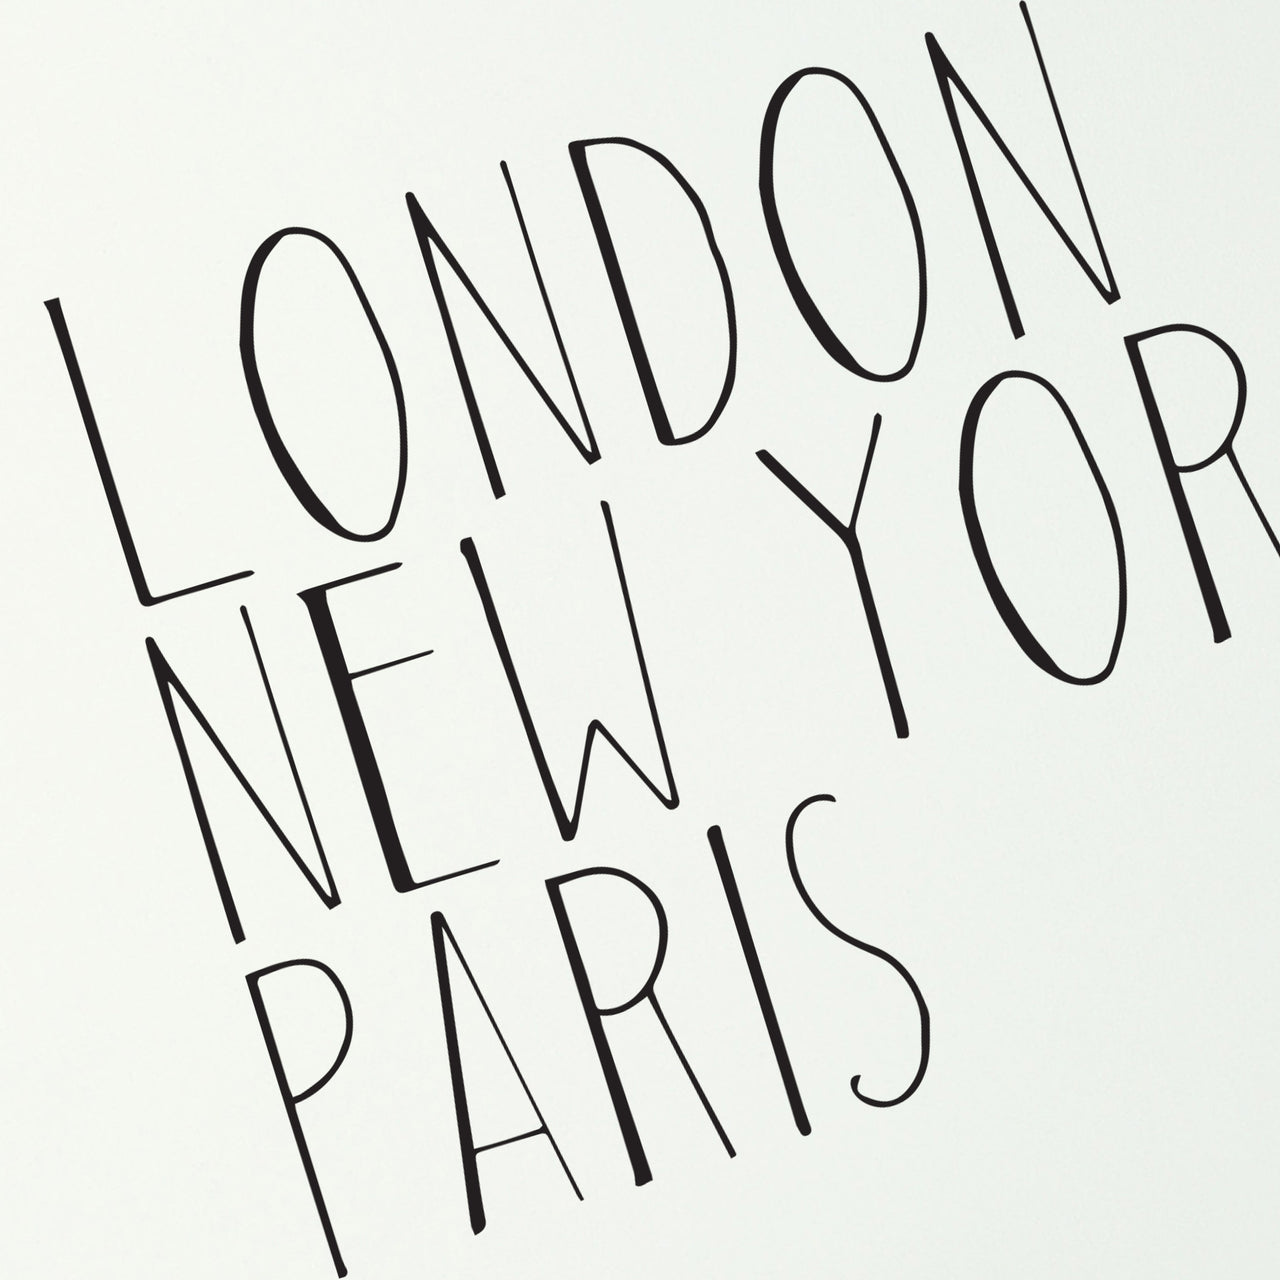 London, New York, Paris Wall Decal